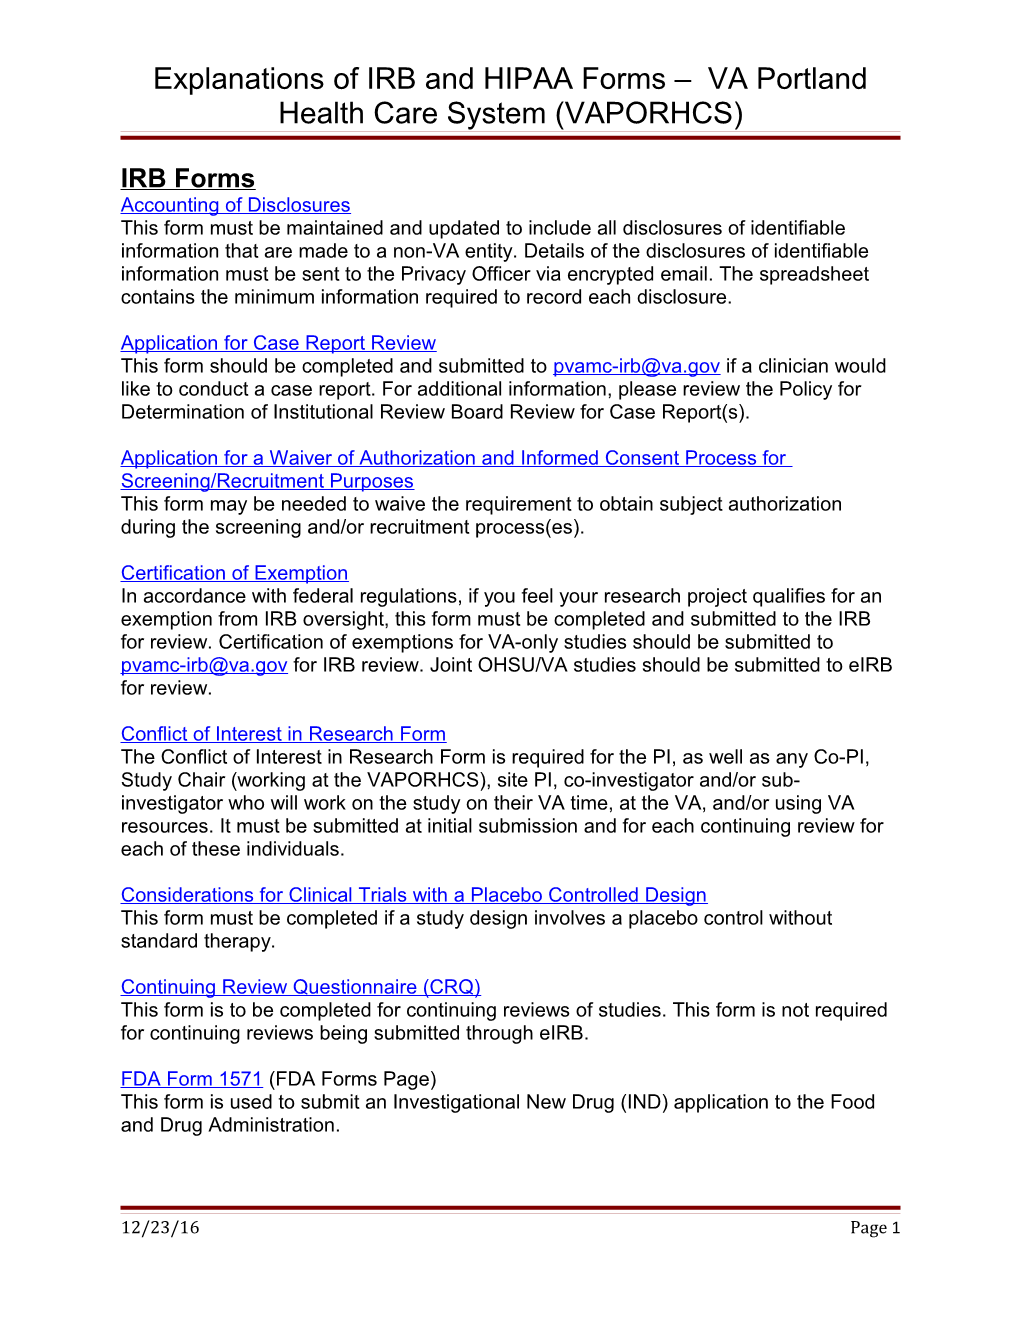 Explanations of IRB Forms Portland VA Medical Center